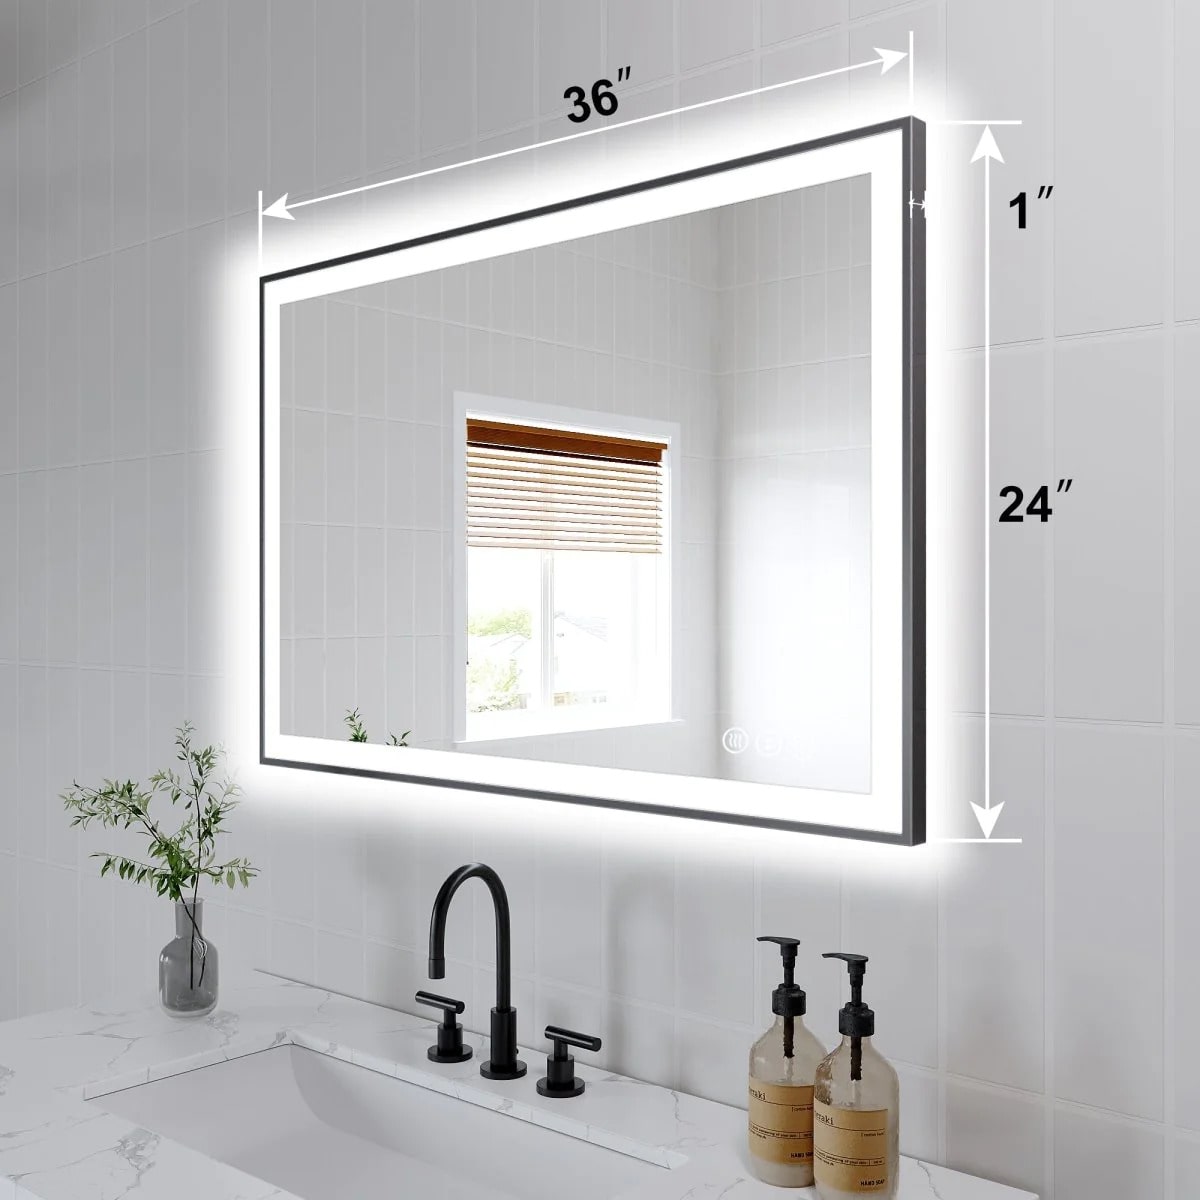 Apex-Noir 24"x36" LED Mirror